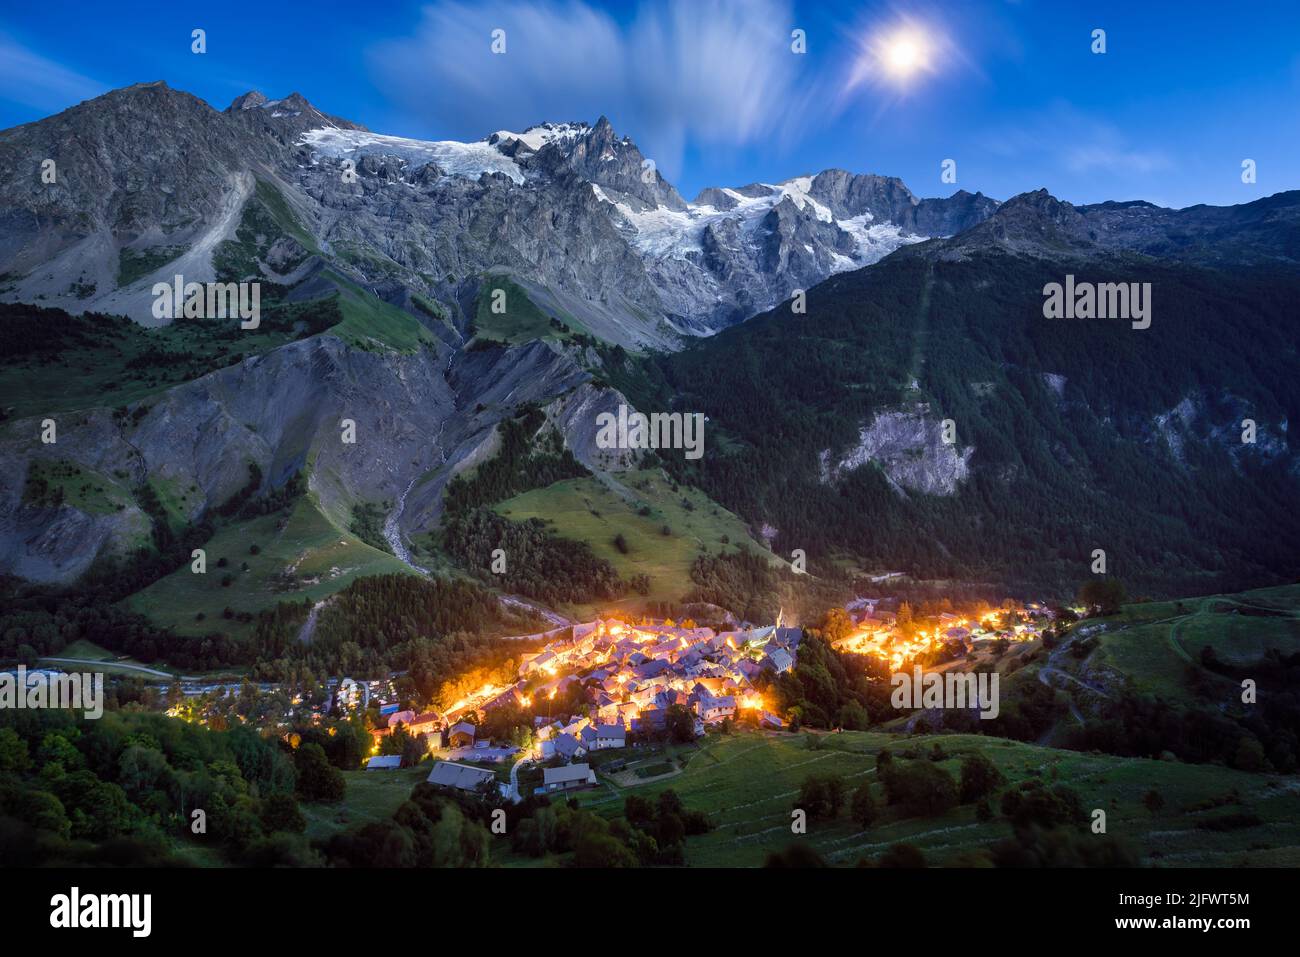 La Grave village with La Meije peak and glaciers at twilight with moonrise. Ecrins National Park, Hautes-Alpes, French Alps, France Stock Photo